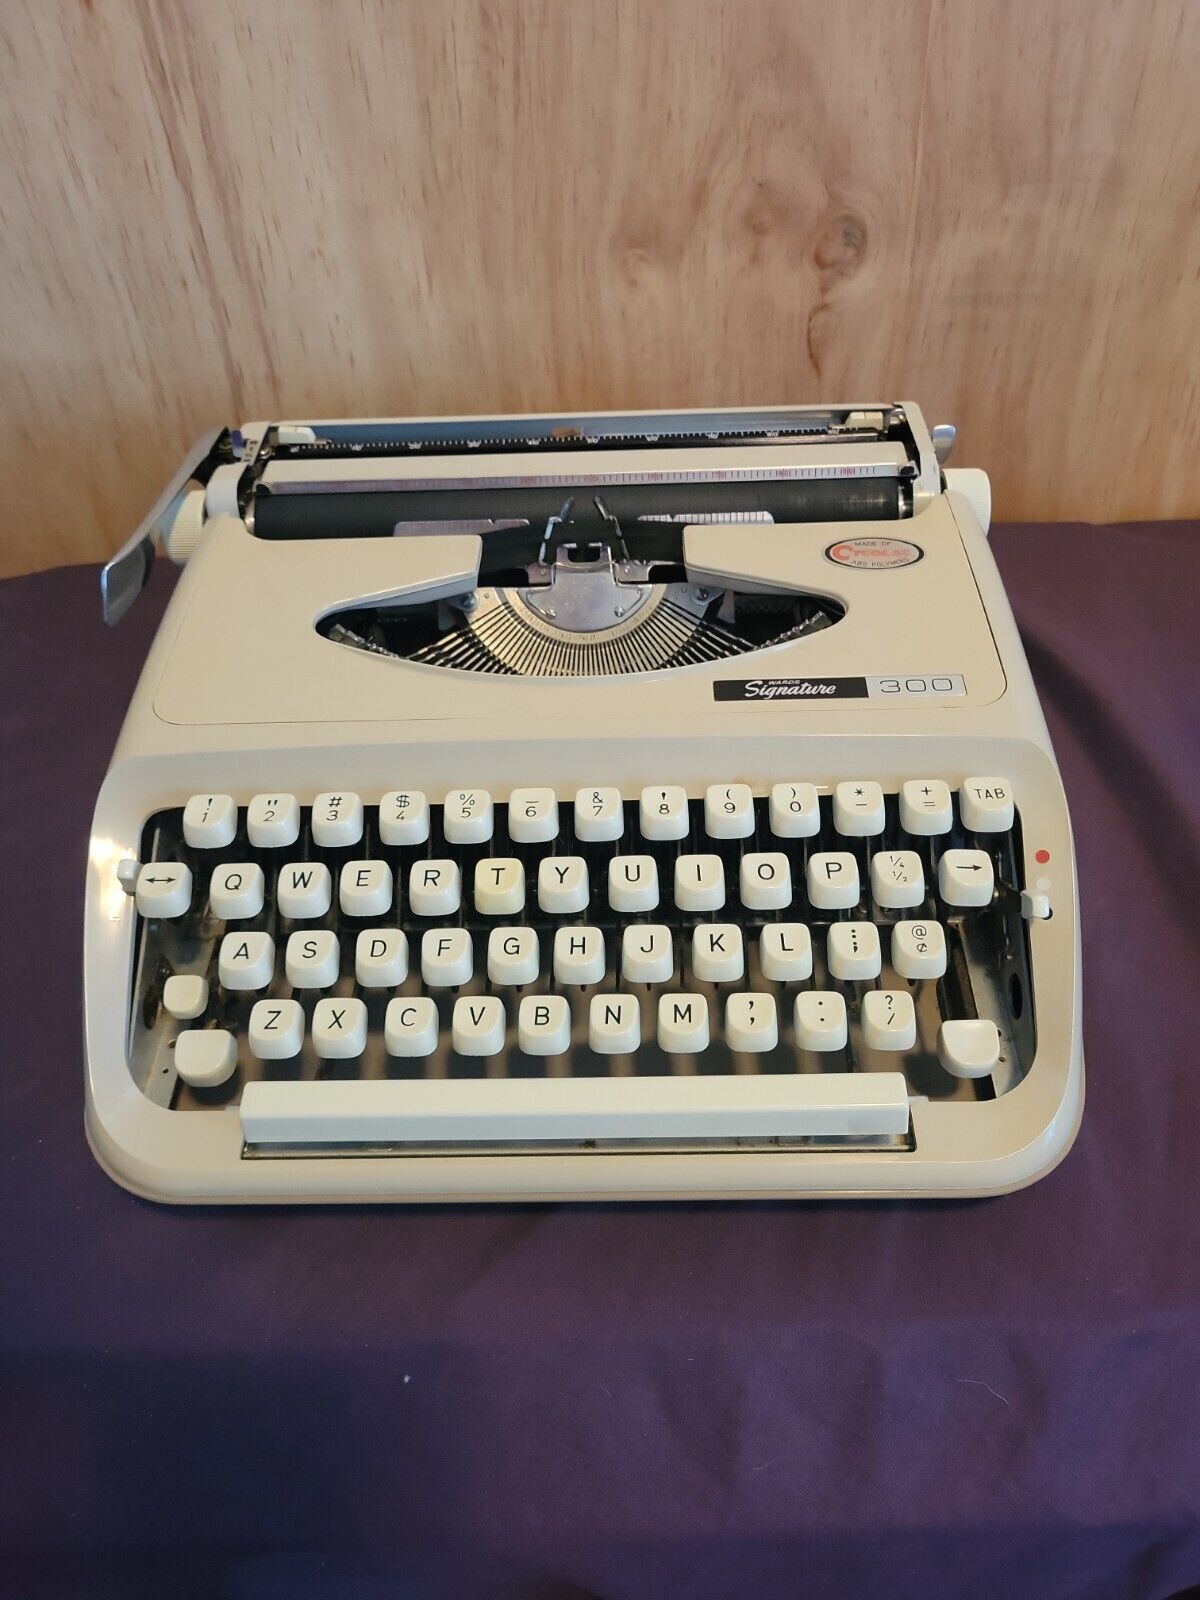 Montgomery Ward signature 300 typewriter